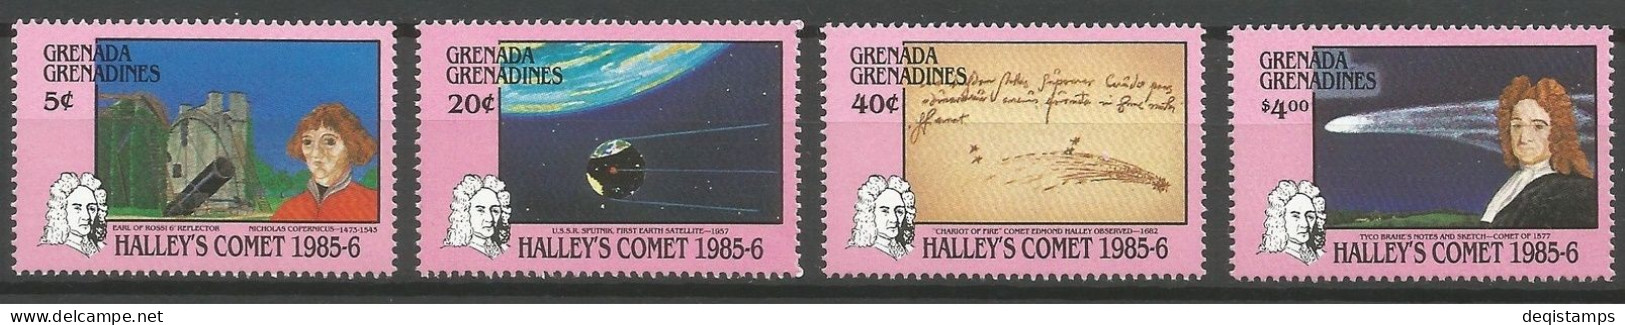 Grenada Grenadines 1986  Space Halley's Comet Set + MSS  MNH** - Nordamerika